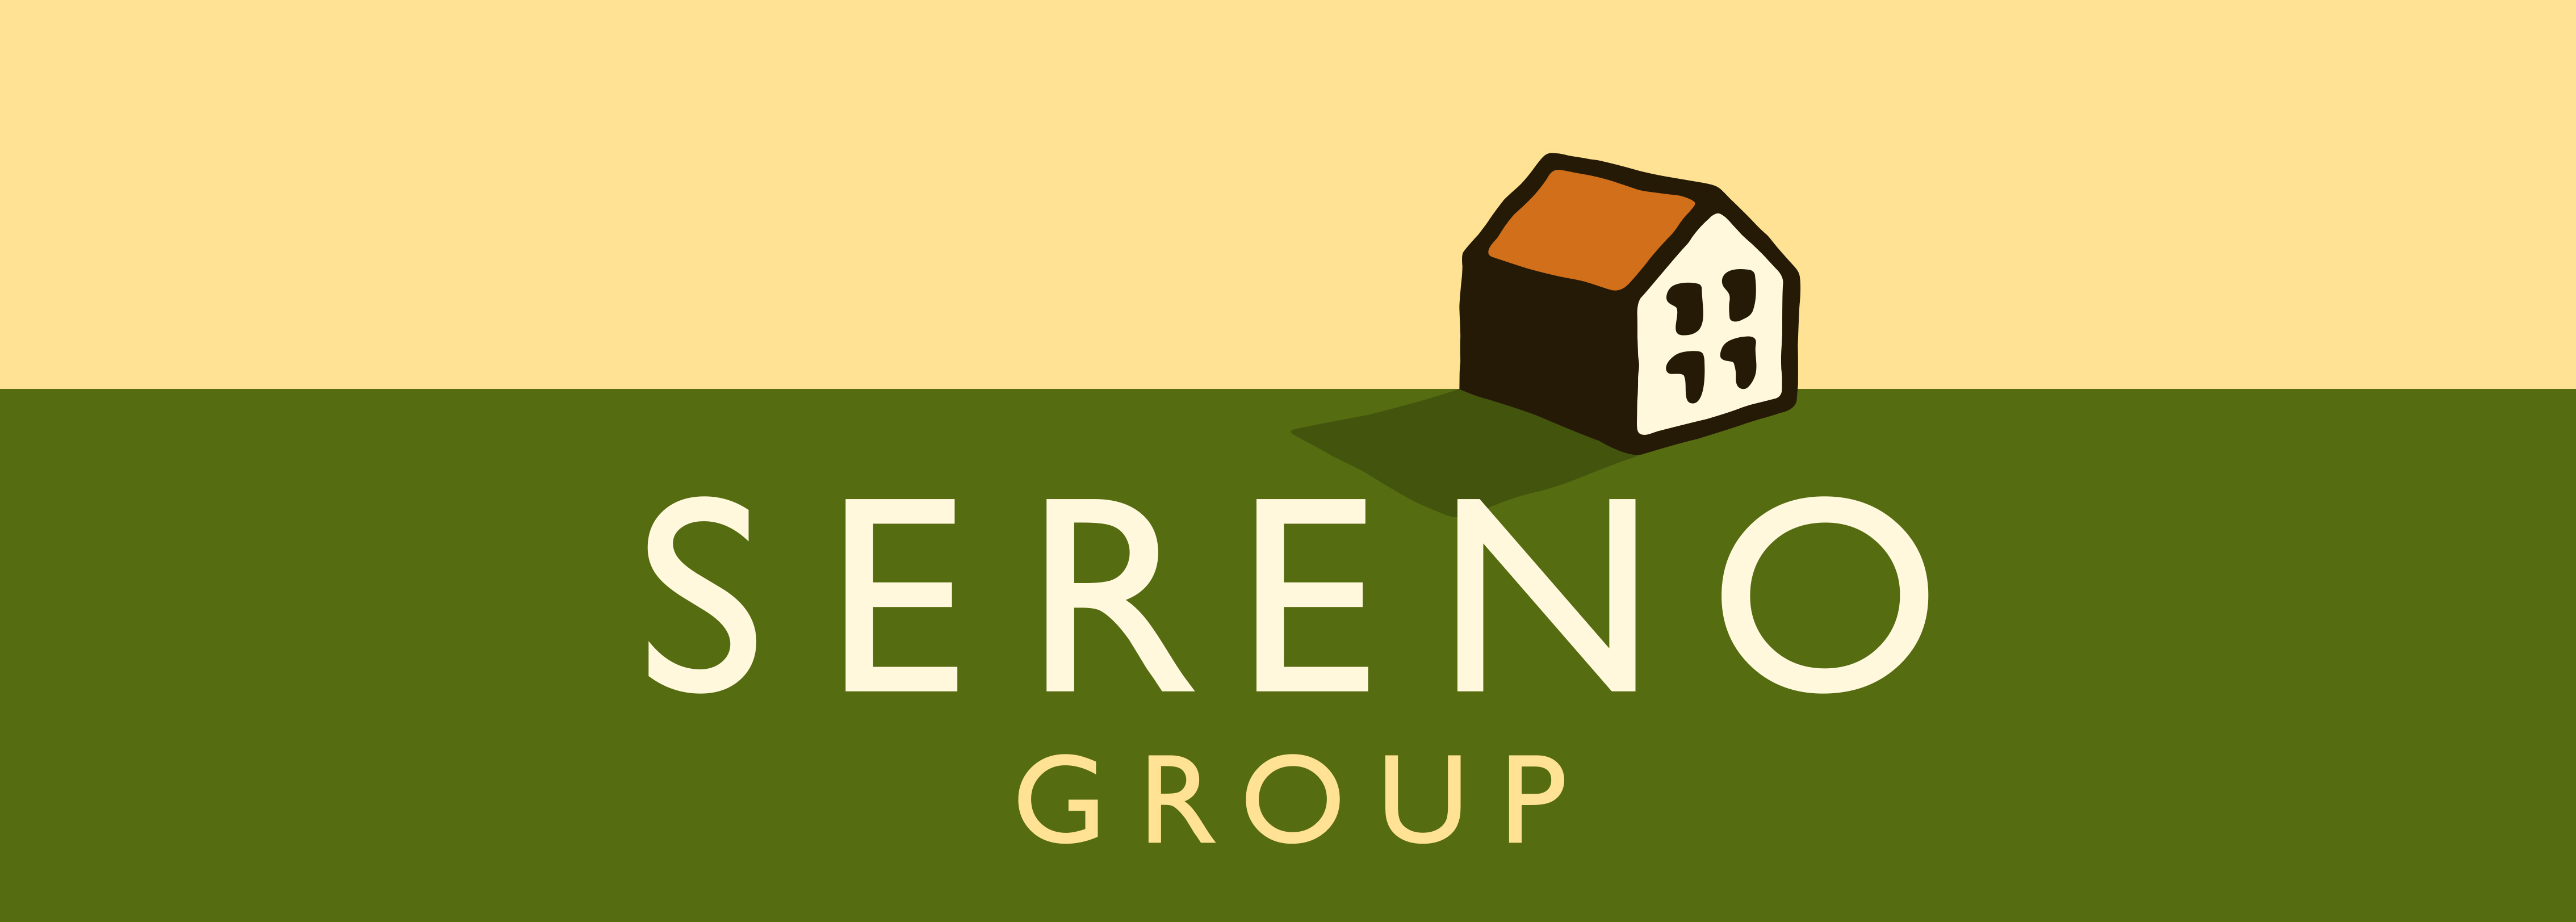 Serenco_Group_logo